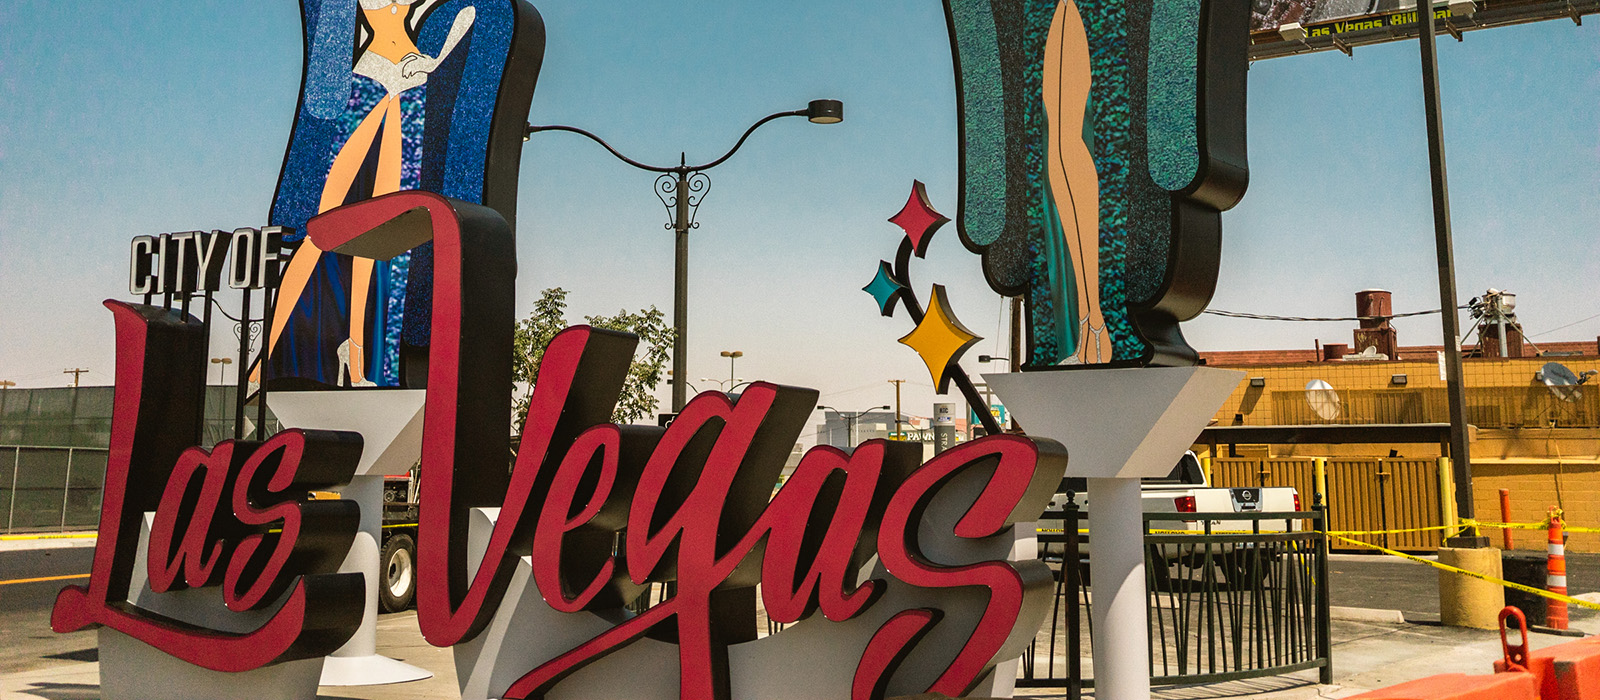 city of las vegas logo